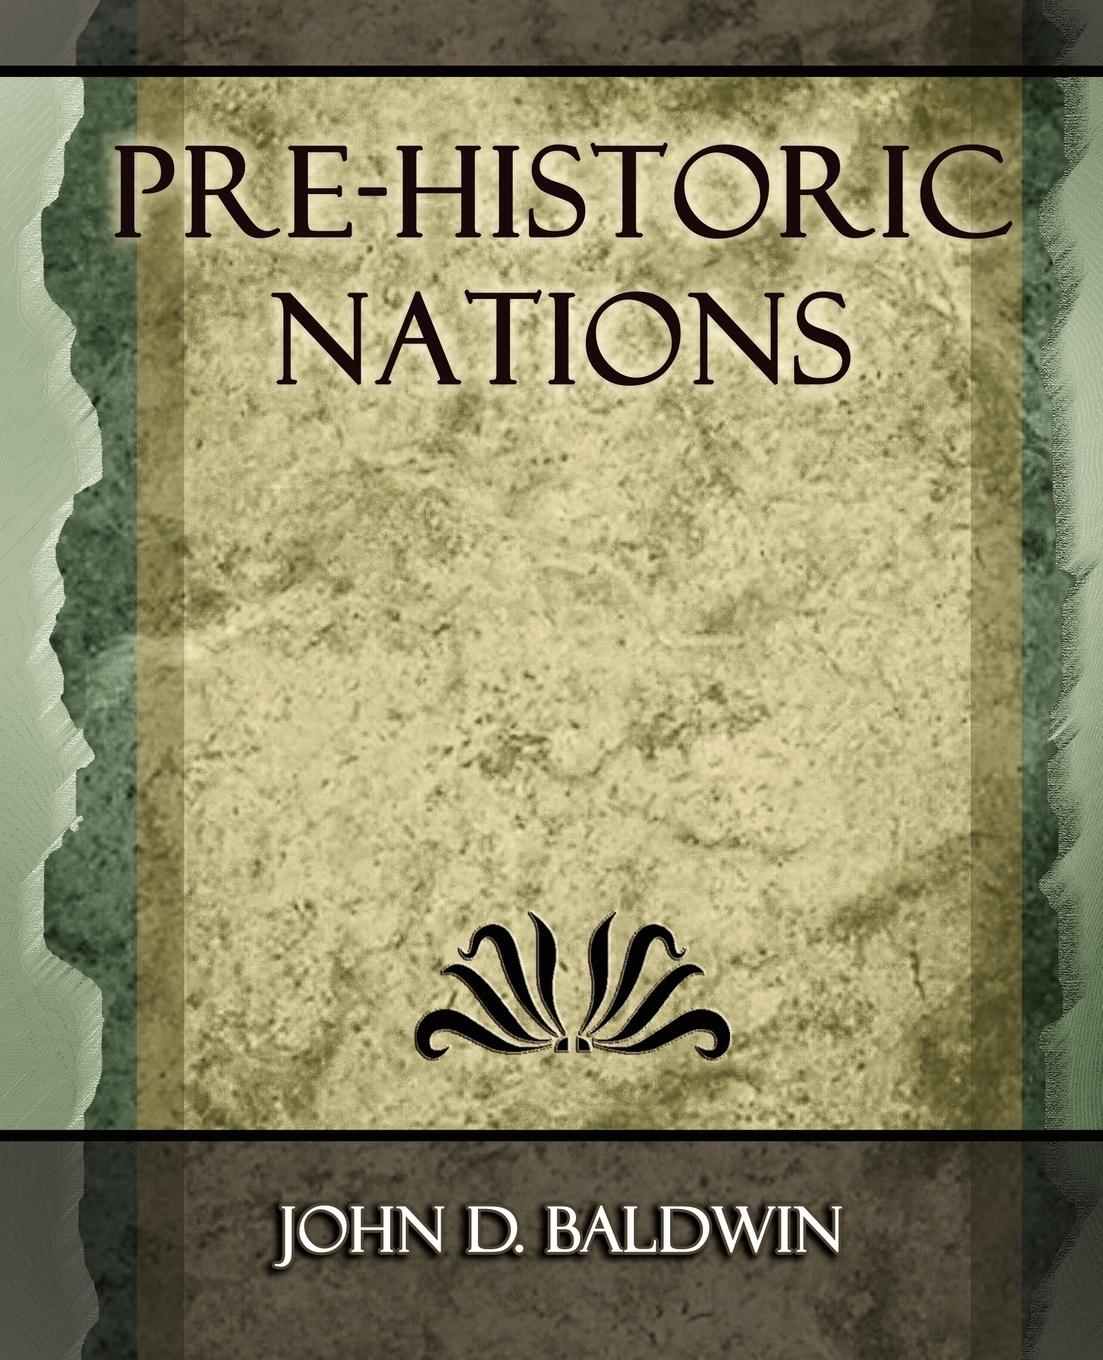 Pre-Historic Nations - 1873 - John D. Baldwin, D. Baldwin|John D. Baldwin